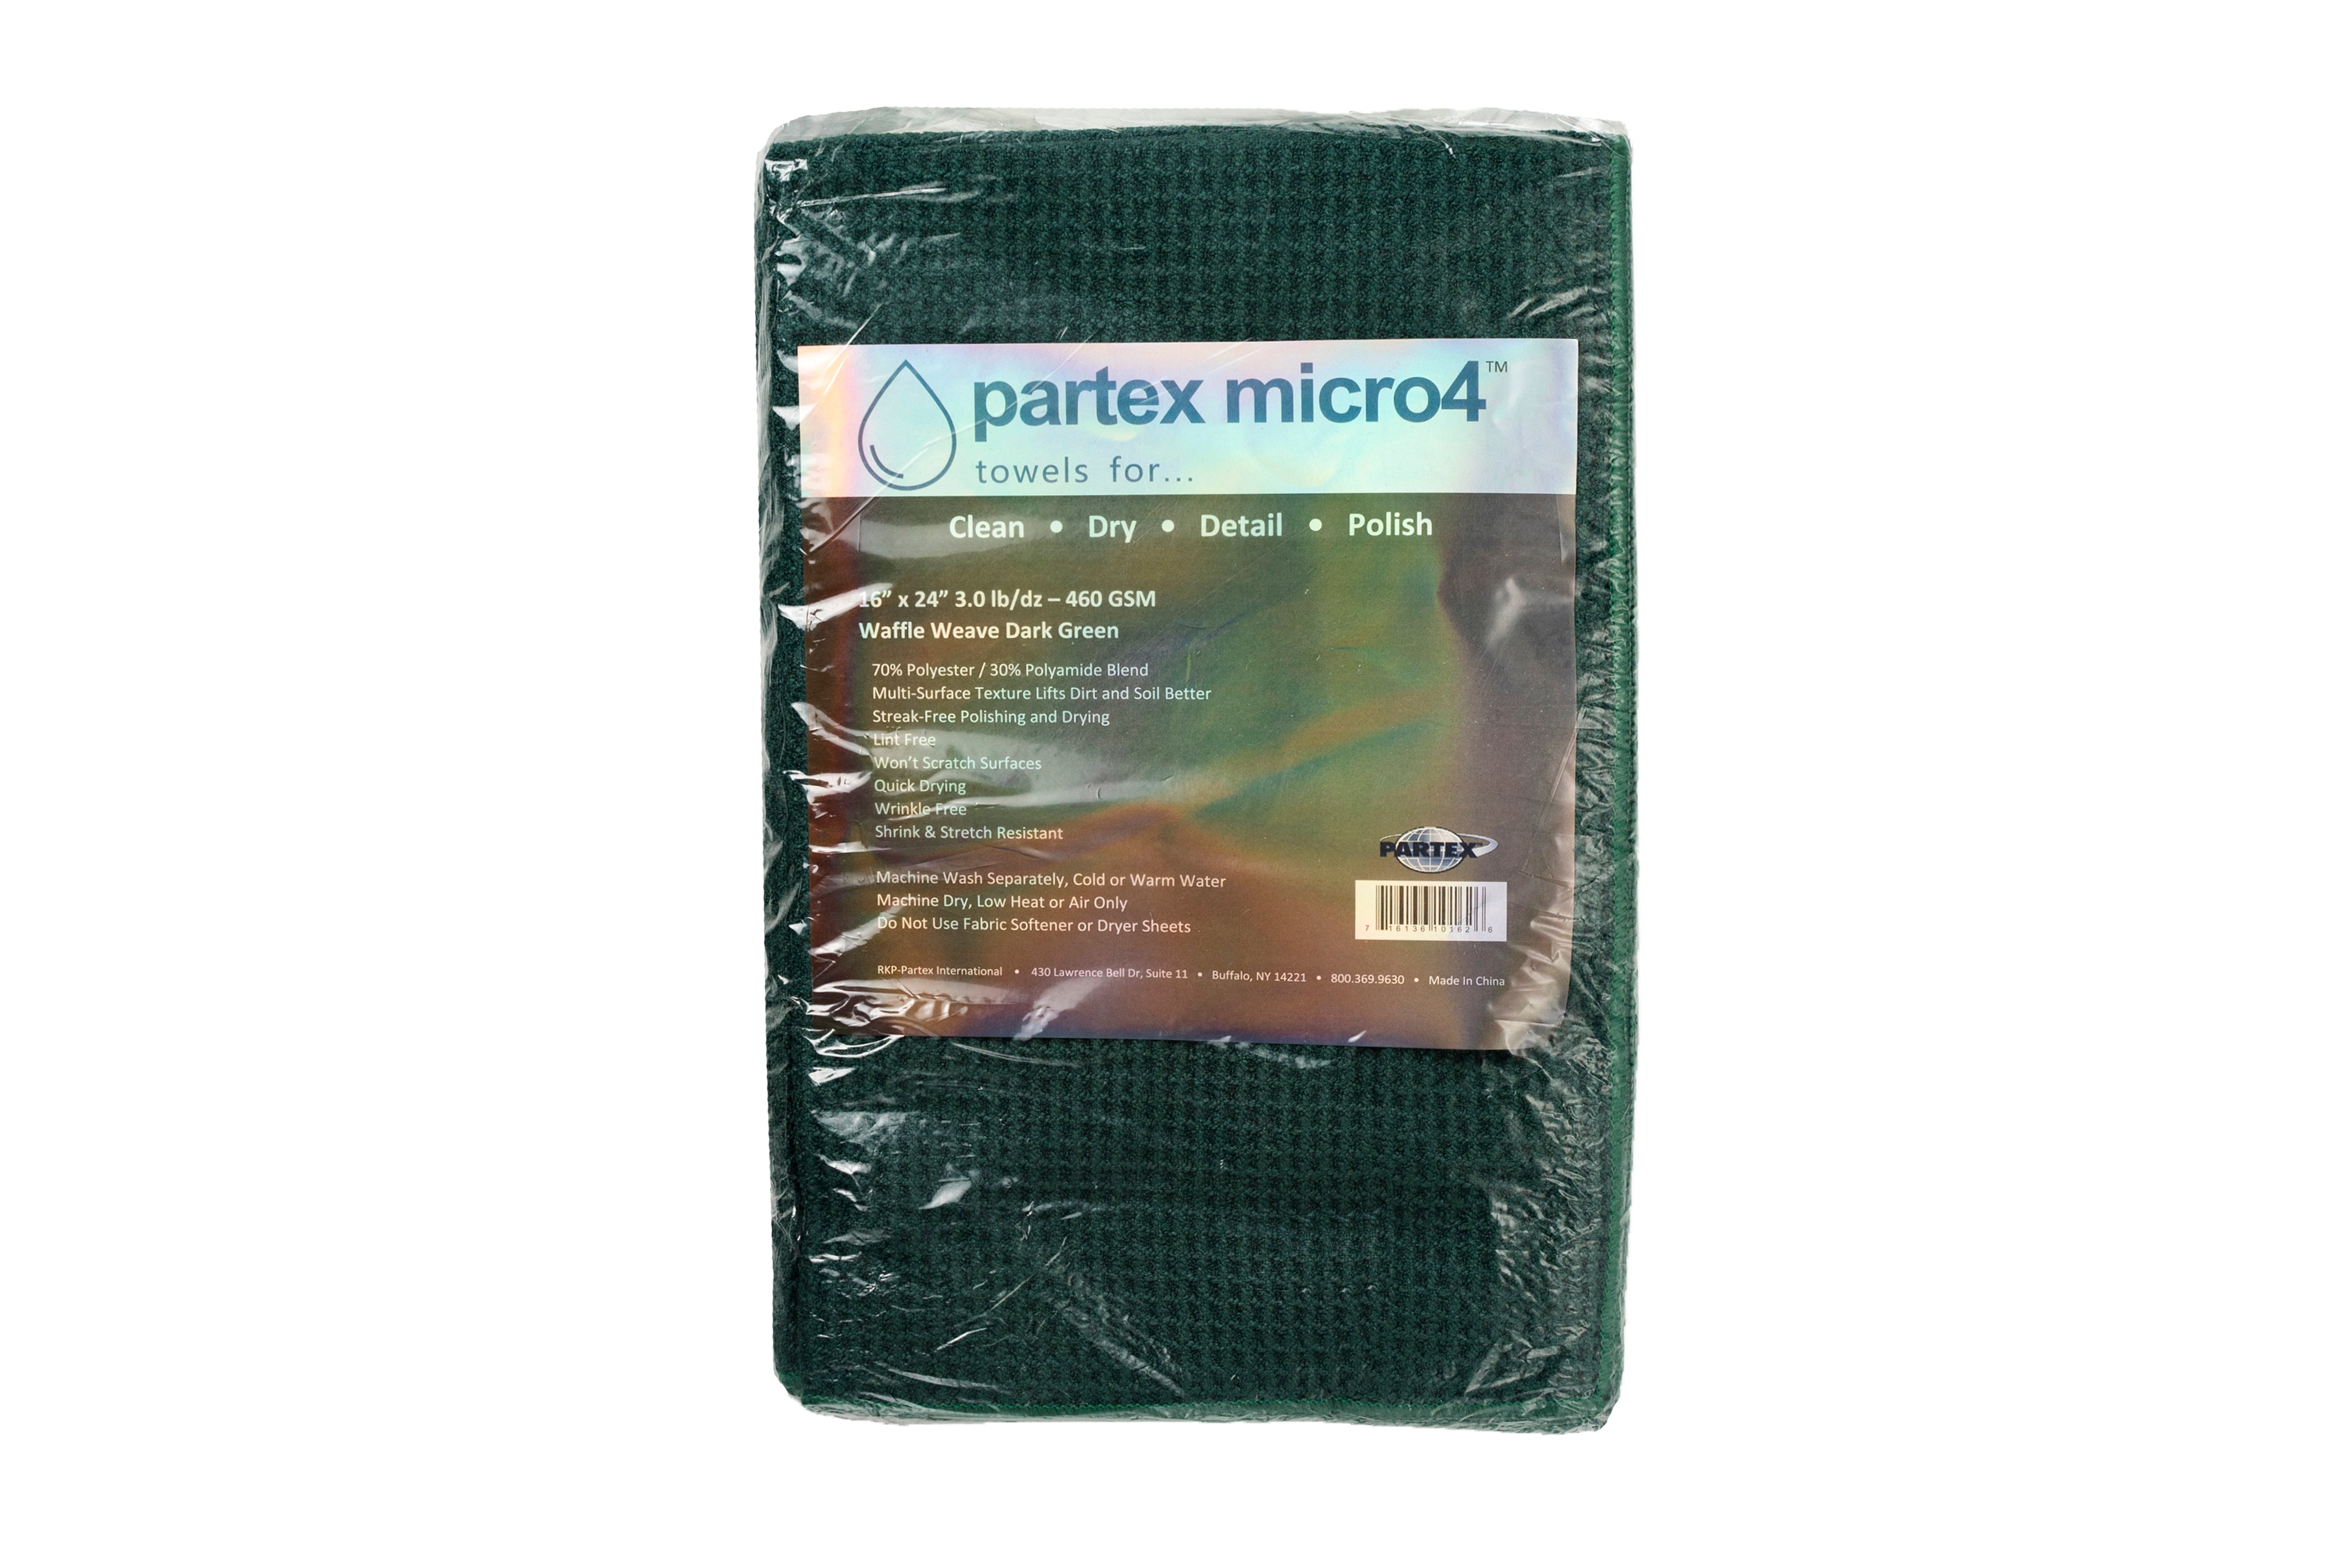 Partex micro4™ Microfiber 24" x 24" Waffle Weave Towels